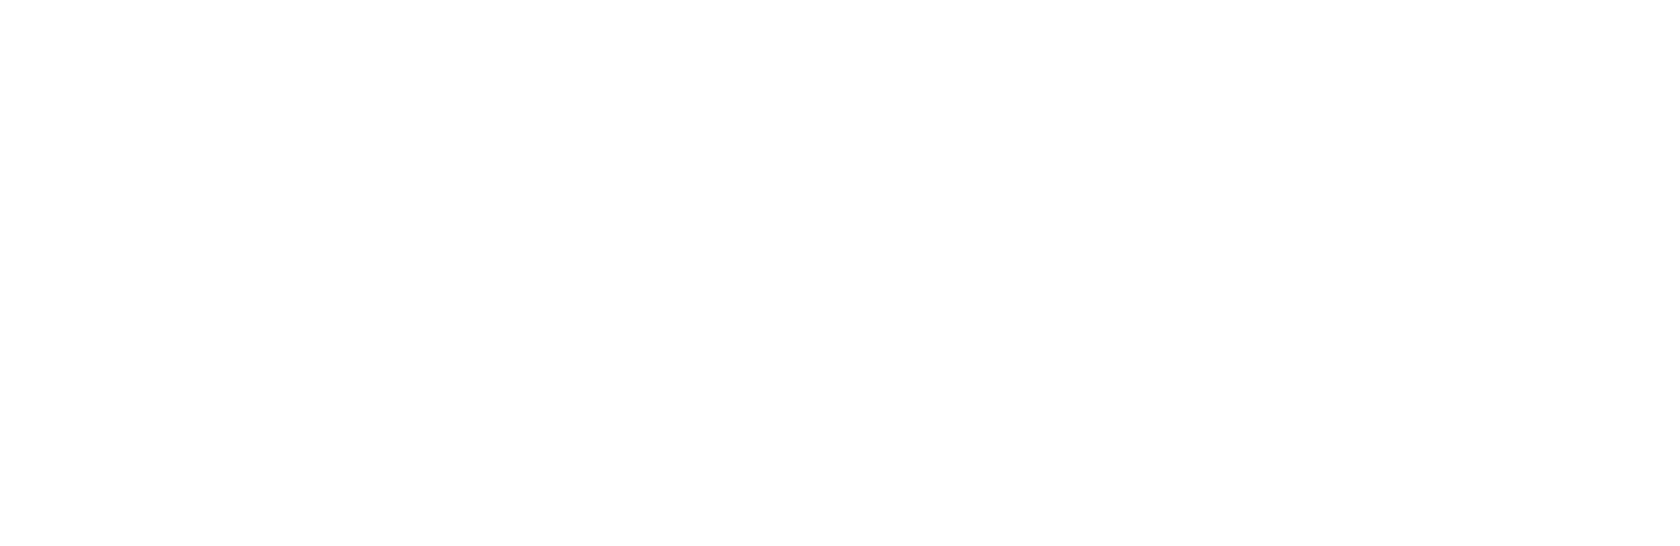 Логотип калибровочного бюро "Kinzin"